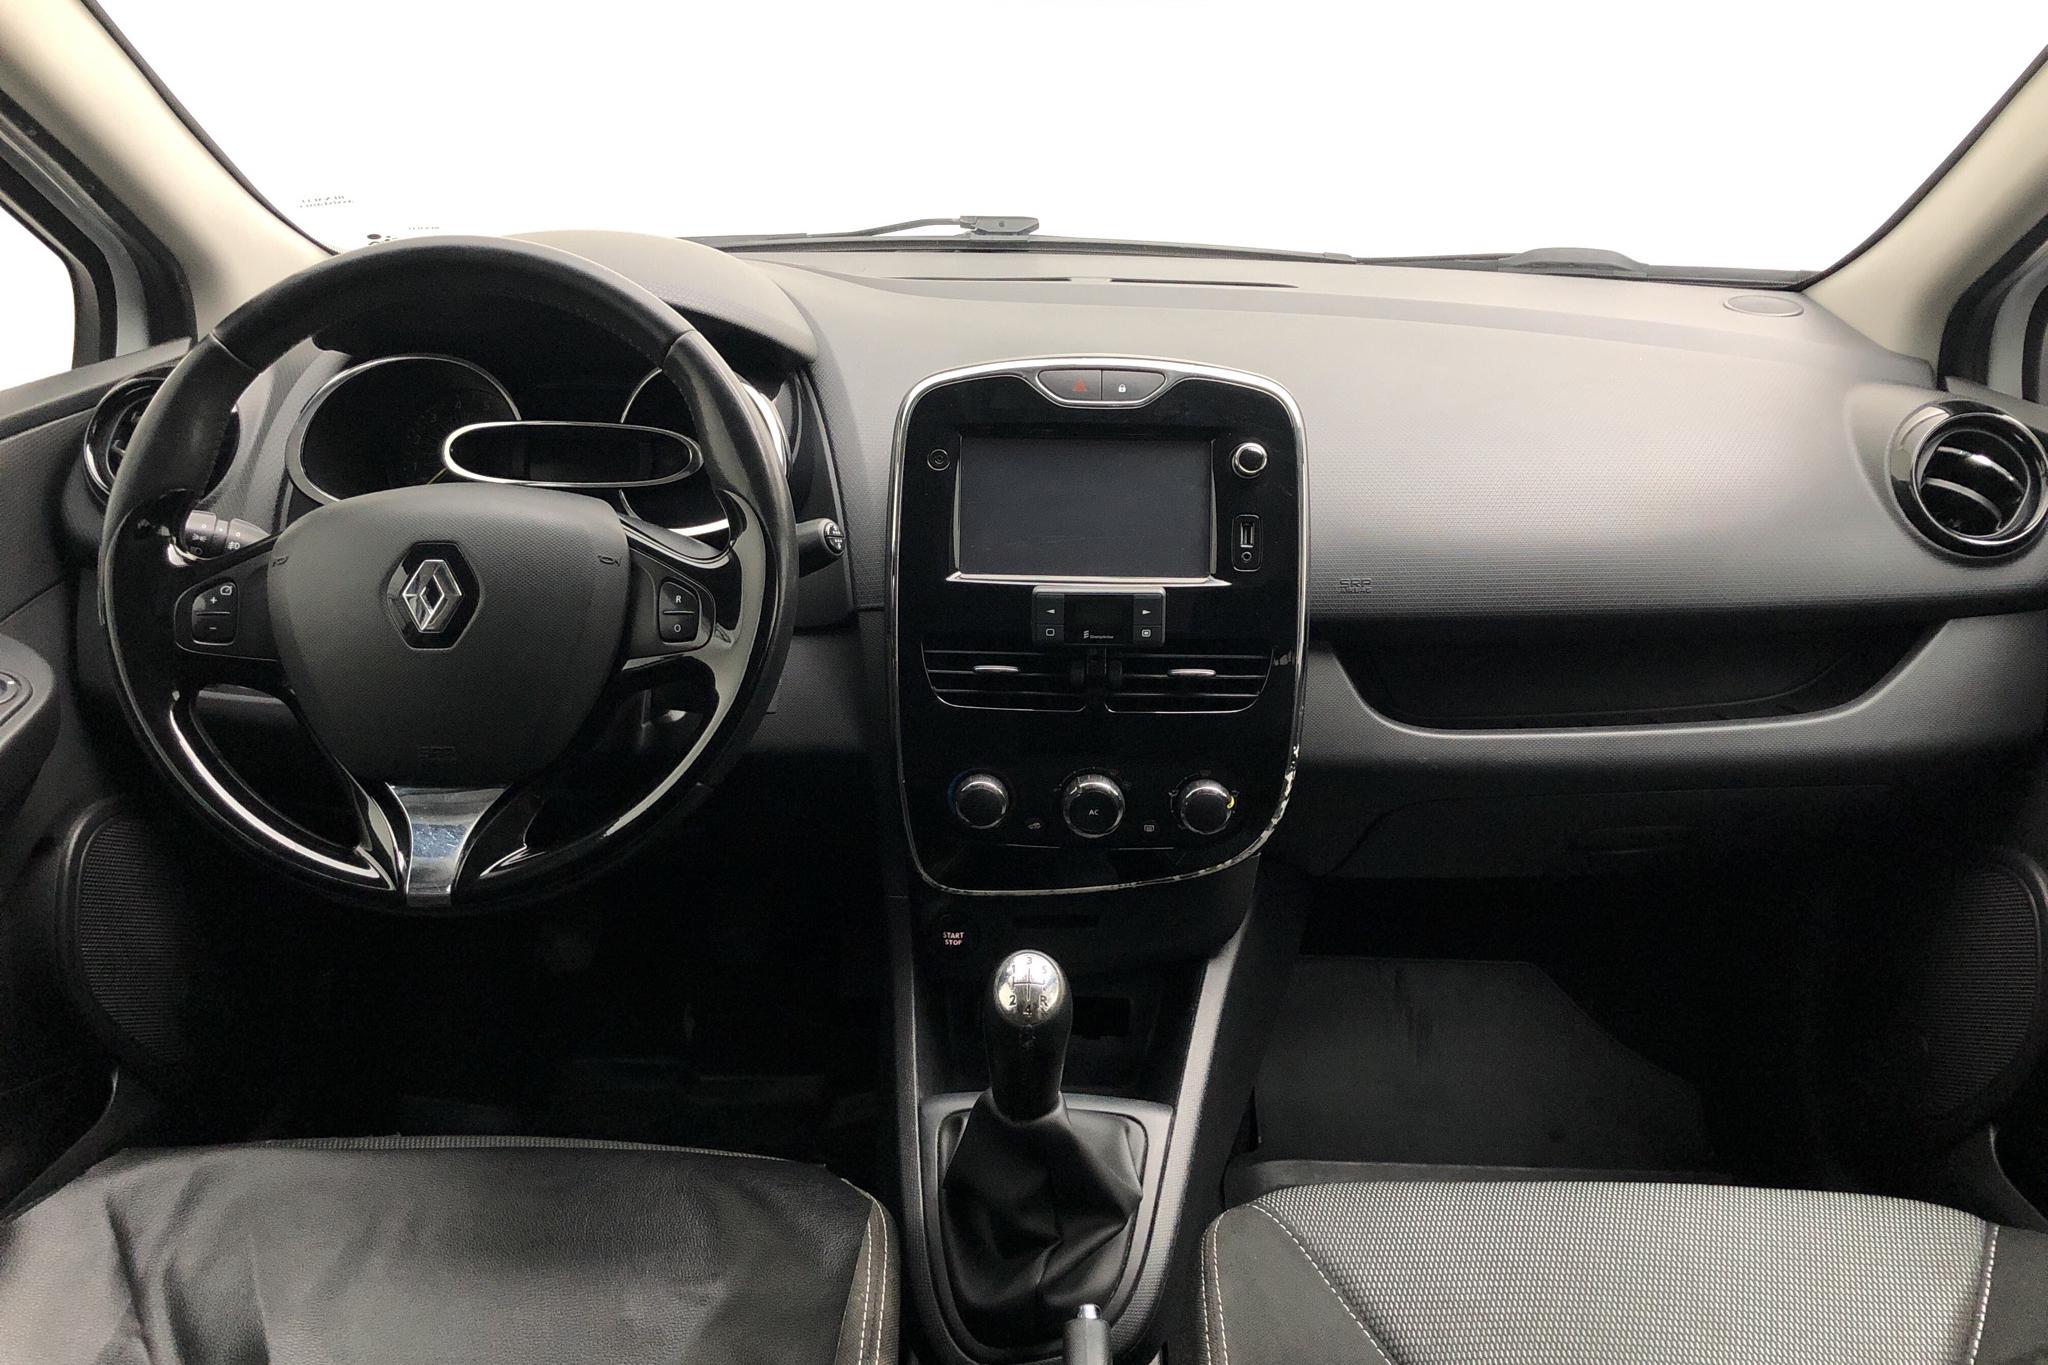 Renault Clio IV 1.5 dCi 5dr (90hk) - 189 710 km - Manual - white - 2015